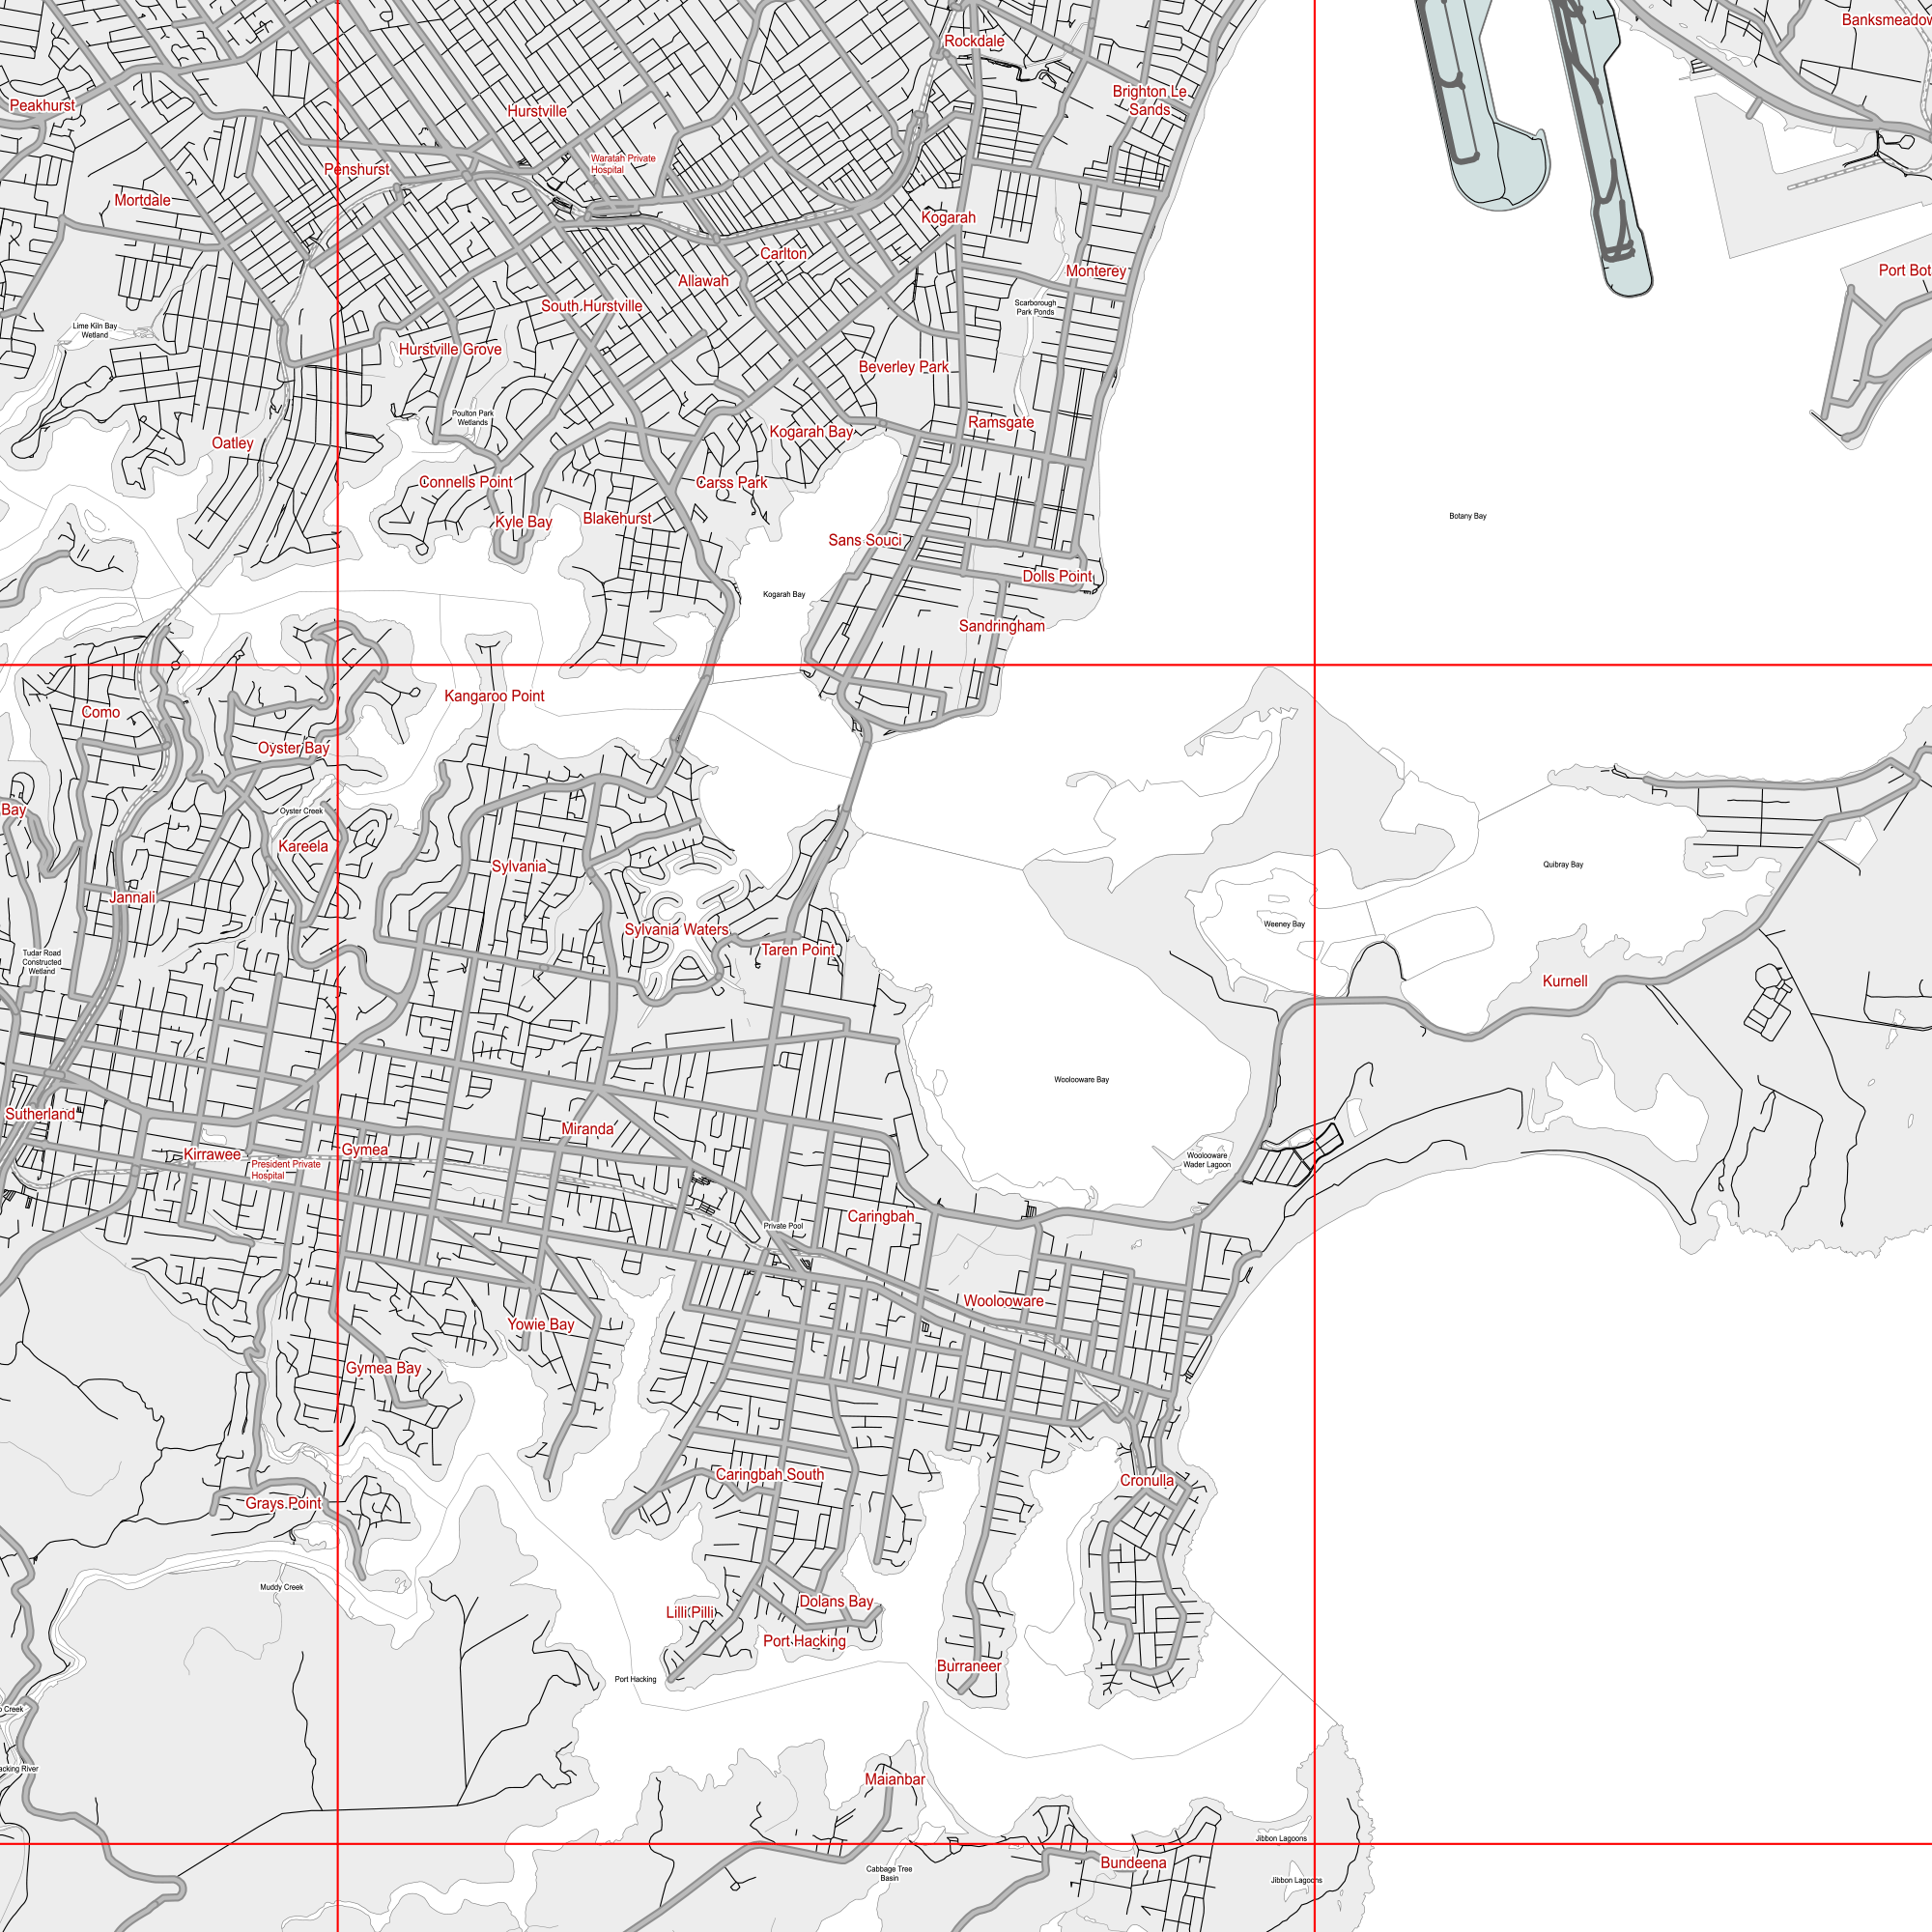 Sydney Australia PDF Vector Map: City Plan Low Detailed (simple BLANK version) Street Map editable Adobe PDF in layers